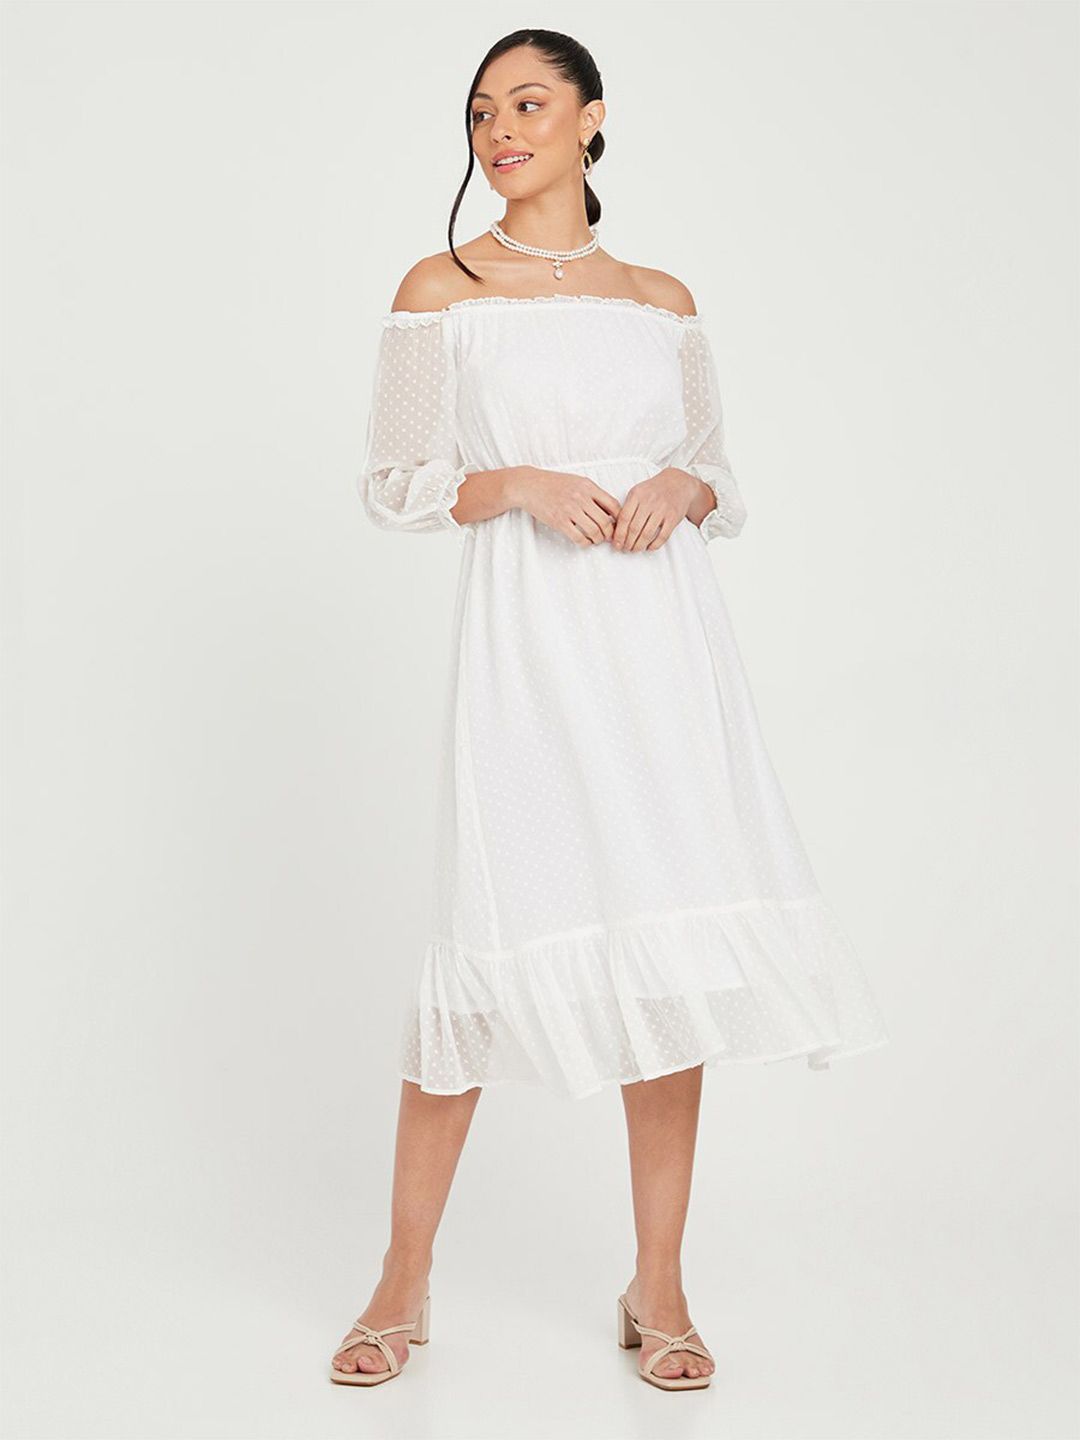 Styli White Midi Dress Price in India